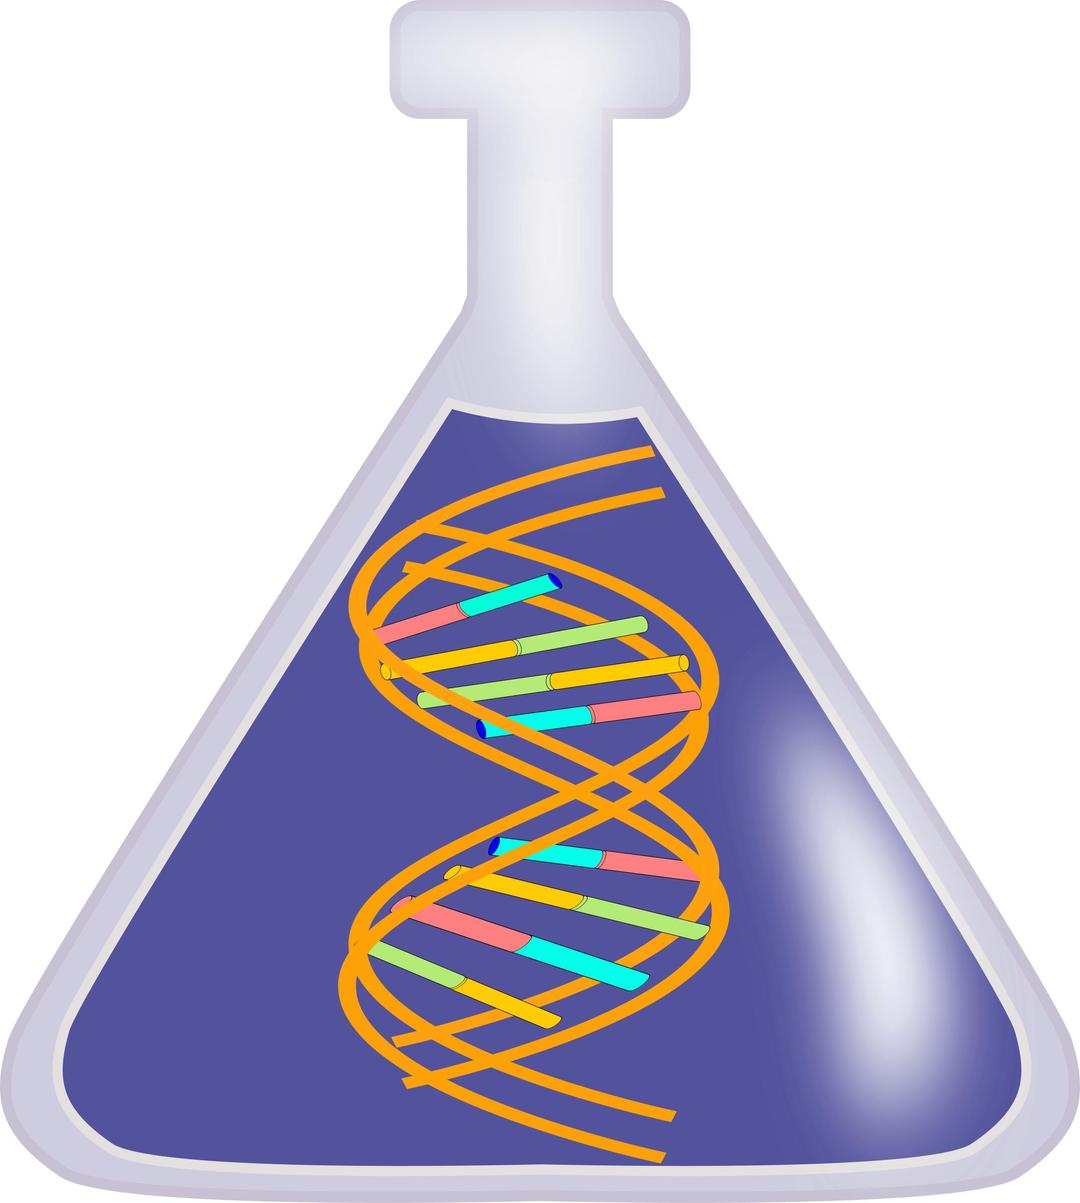 DNA in a bottle png transparent